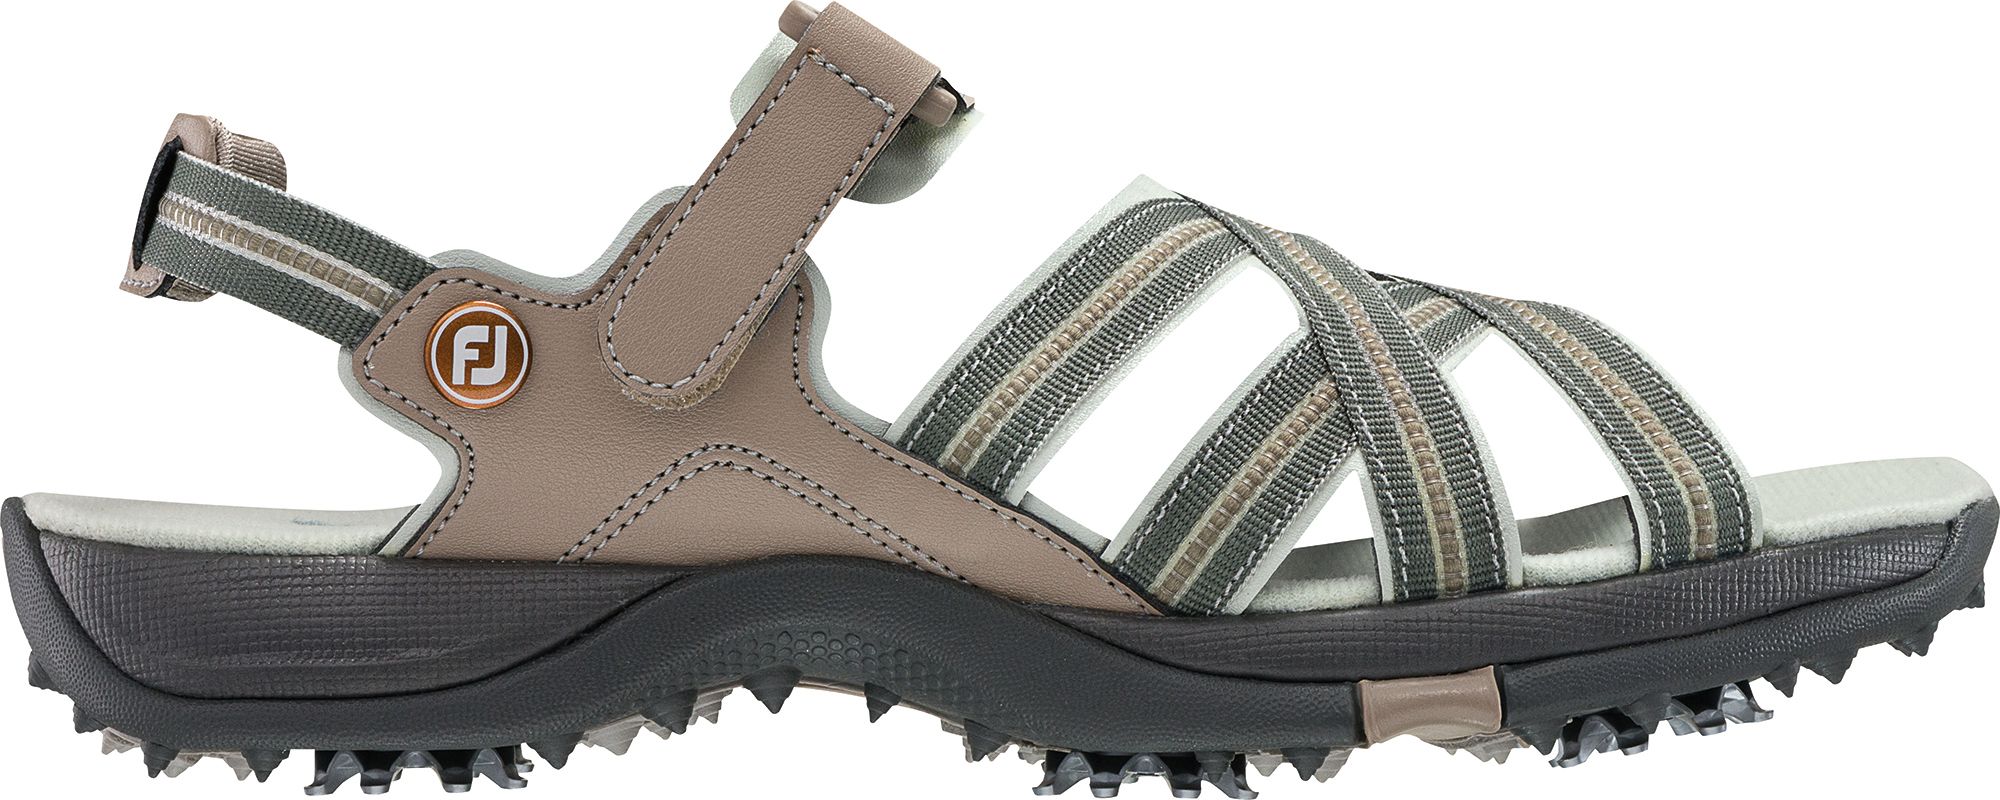 Golf Sandals | Best Price Guarantee at 